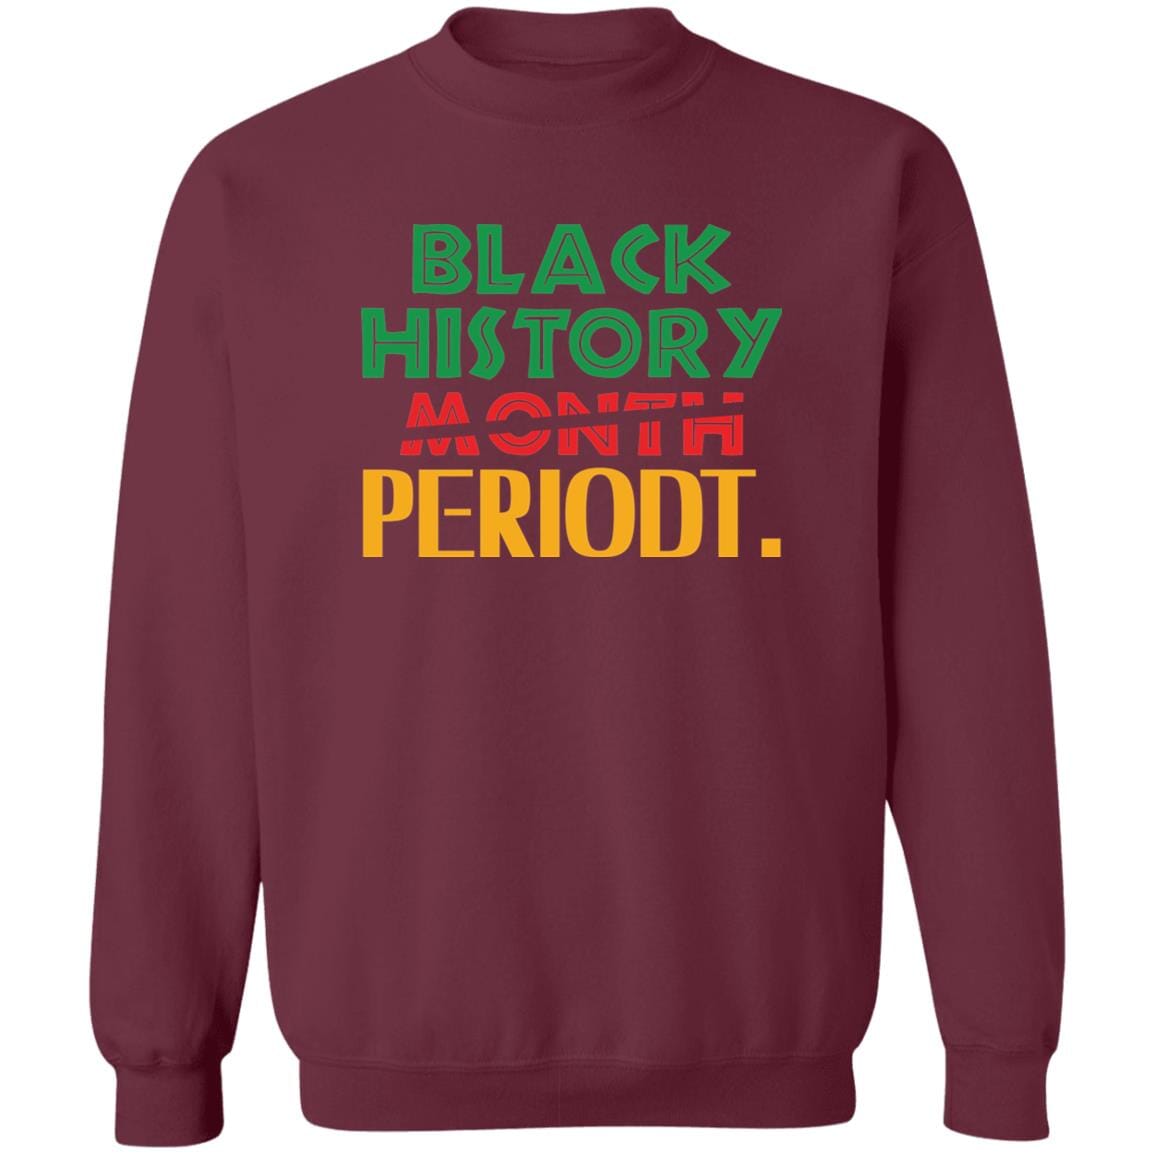 Black History Month Periodt. T-shirt Apparel Gearment Crewneck Sweatshirt Maroon S